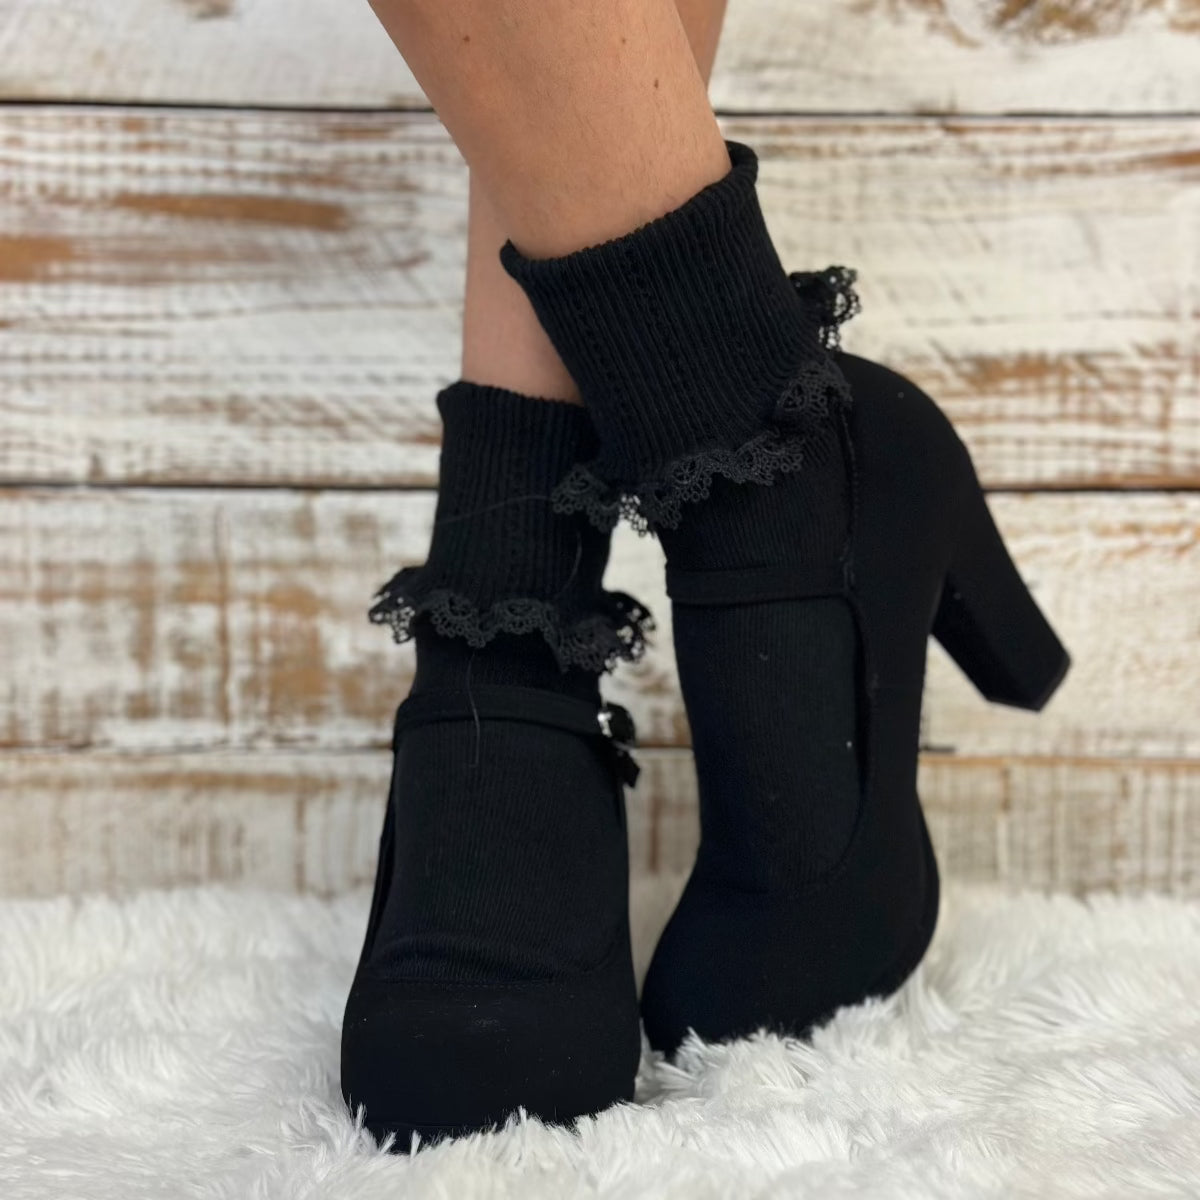 PROMOTIONAL SALE lace cuff ankle socks - black, cool lace socks women’s, lace ankle socks, ruffle socks